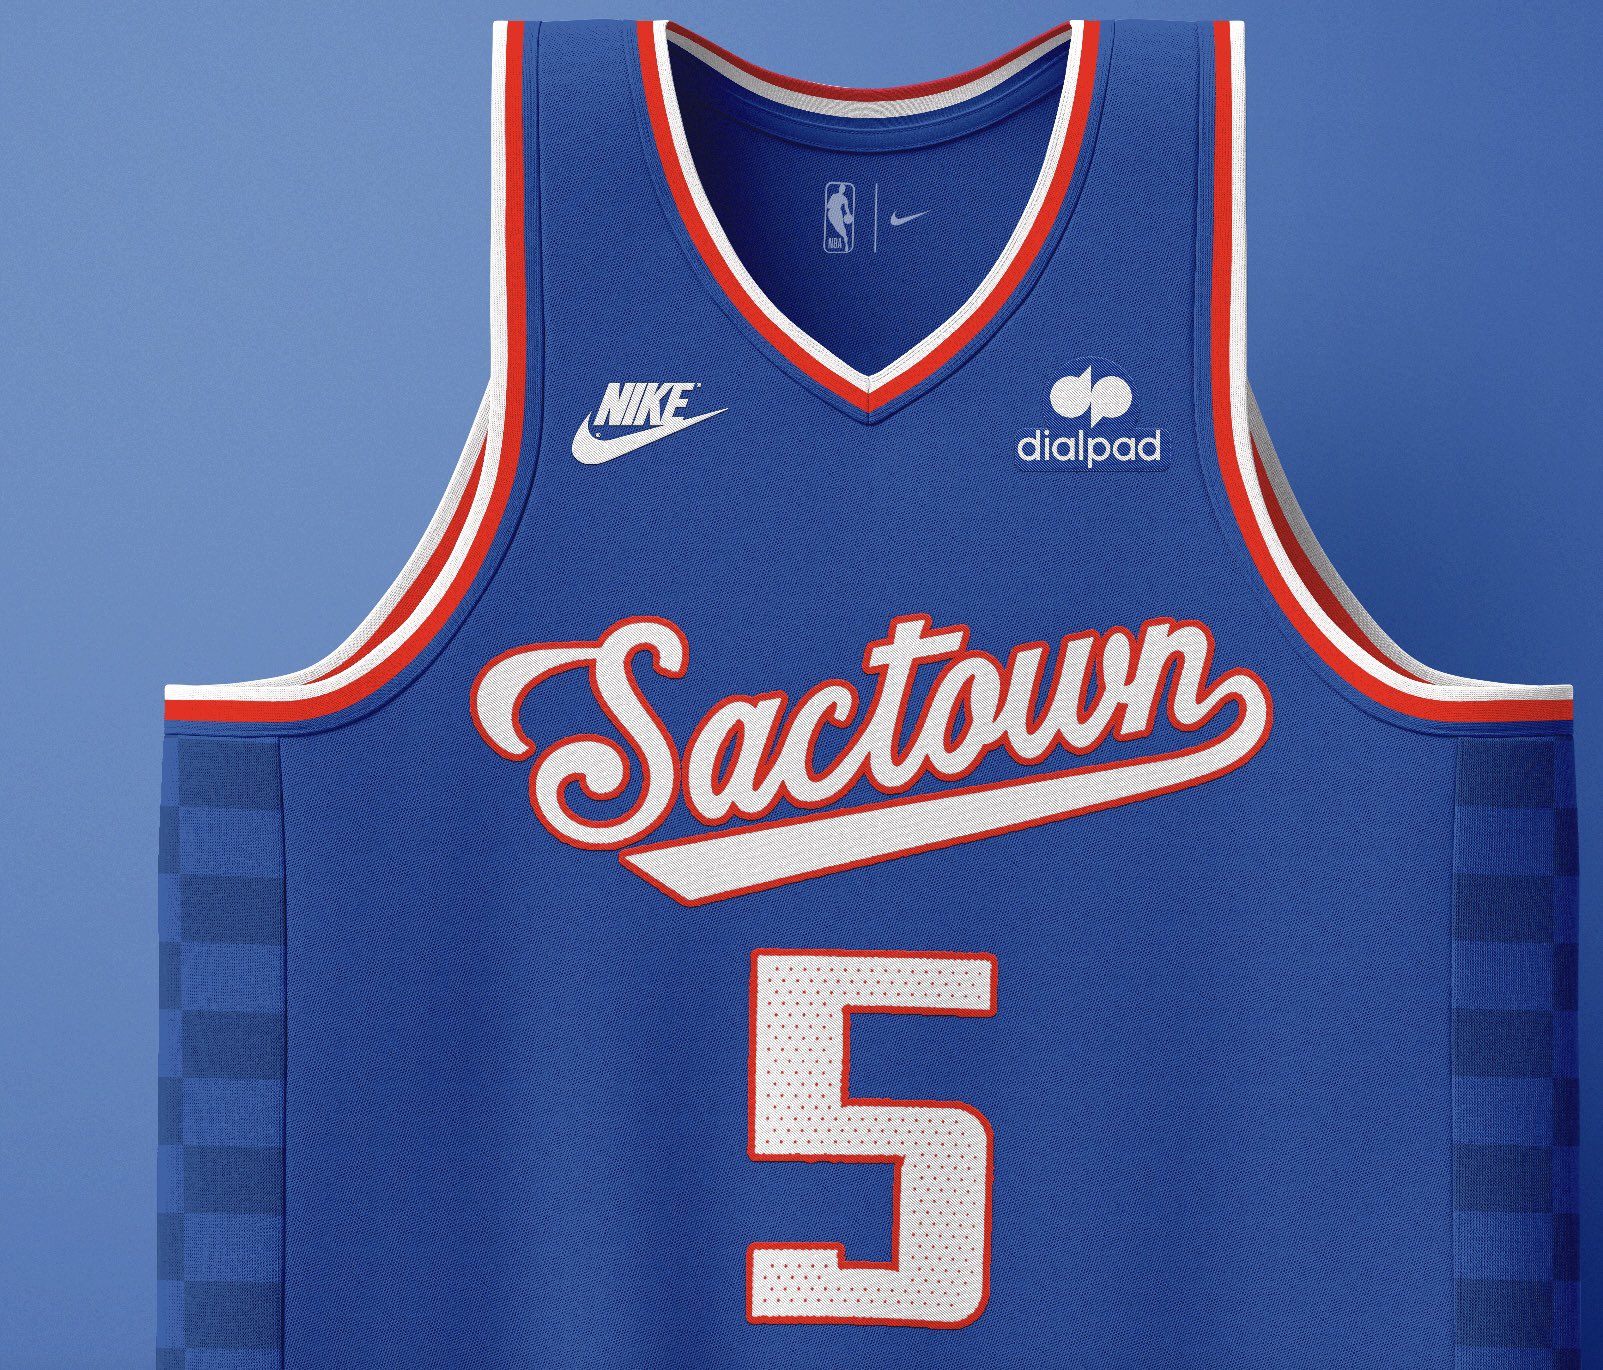 Aniebiet Okon on X: Sacramento Kings “Sactown” classic jersey concept (@ SacramentoKings) #BeamTeam #SacramentoProud #RoarWithUs #NBA #NBATwitter  #NBATwitterLive  / X